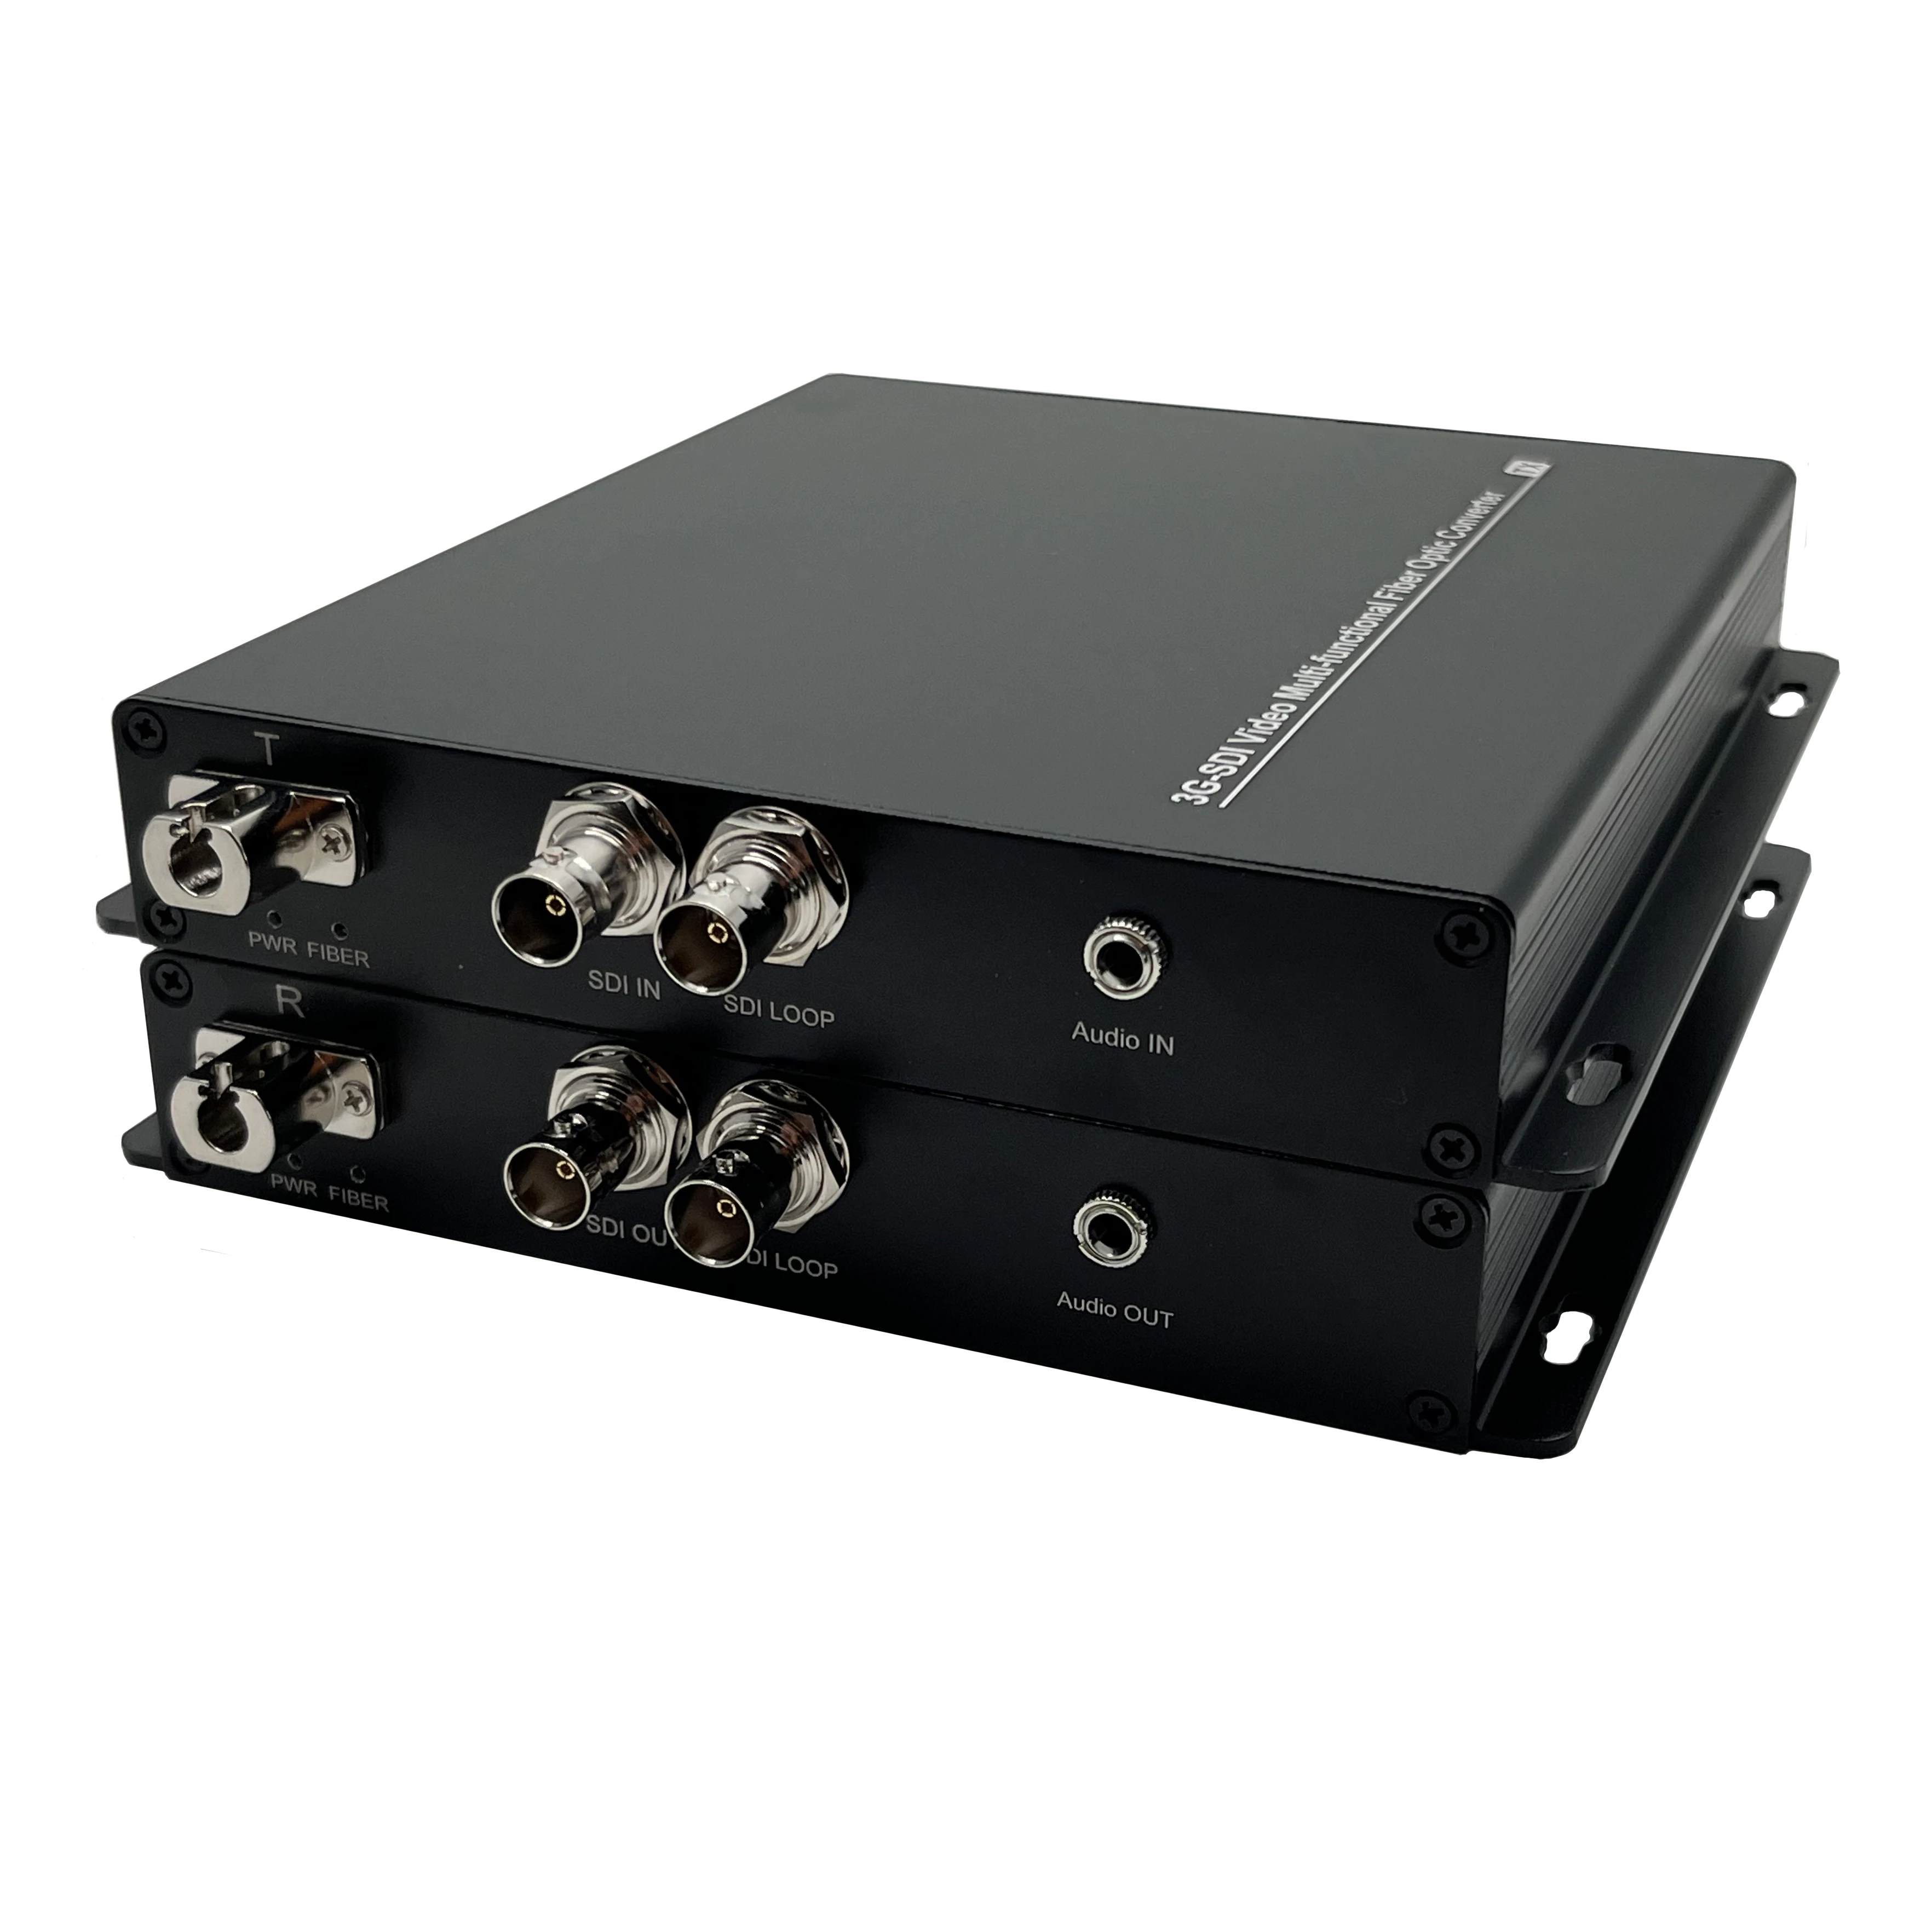 

Broadcast sdi to fiber optic 3g sdi fiber converter fiber optic Transmitter and Receiver with 1ch independant audio converter